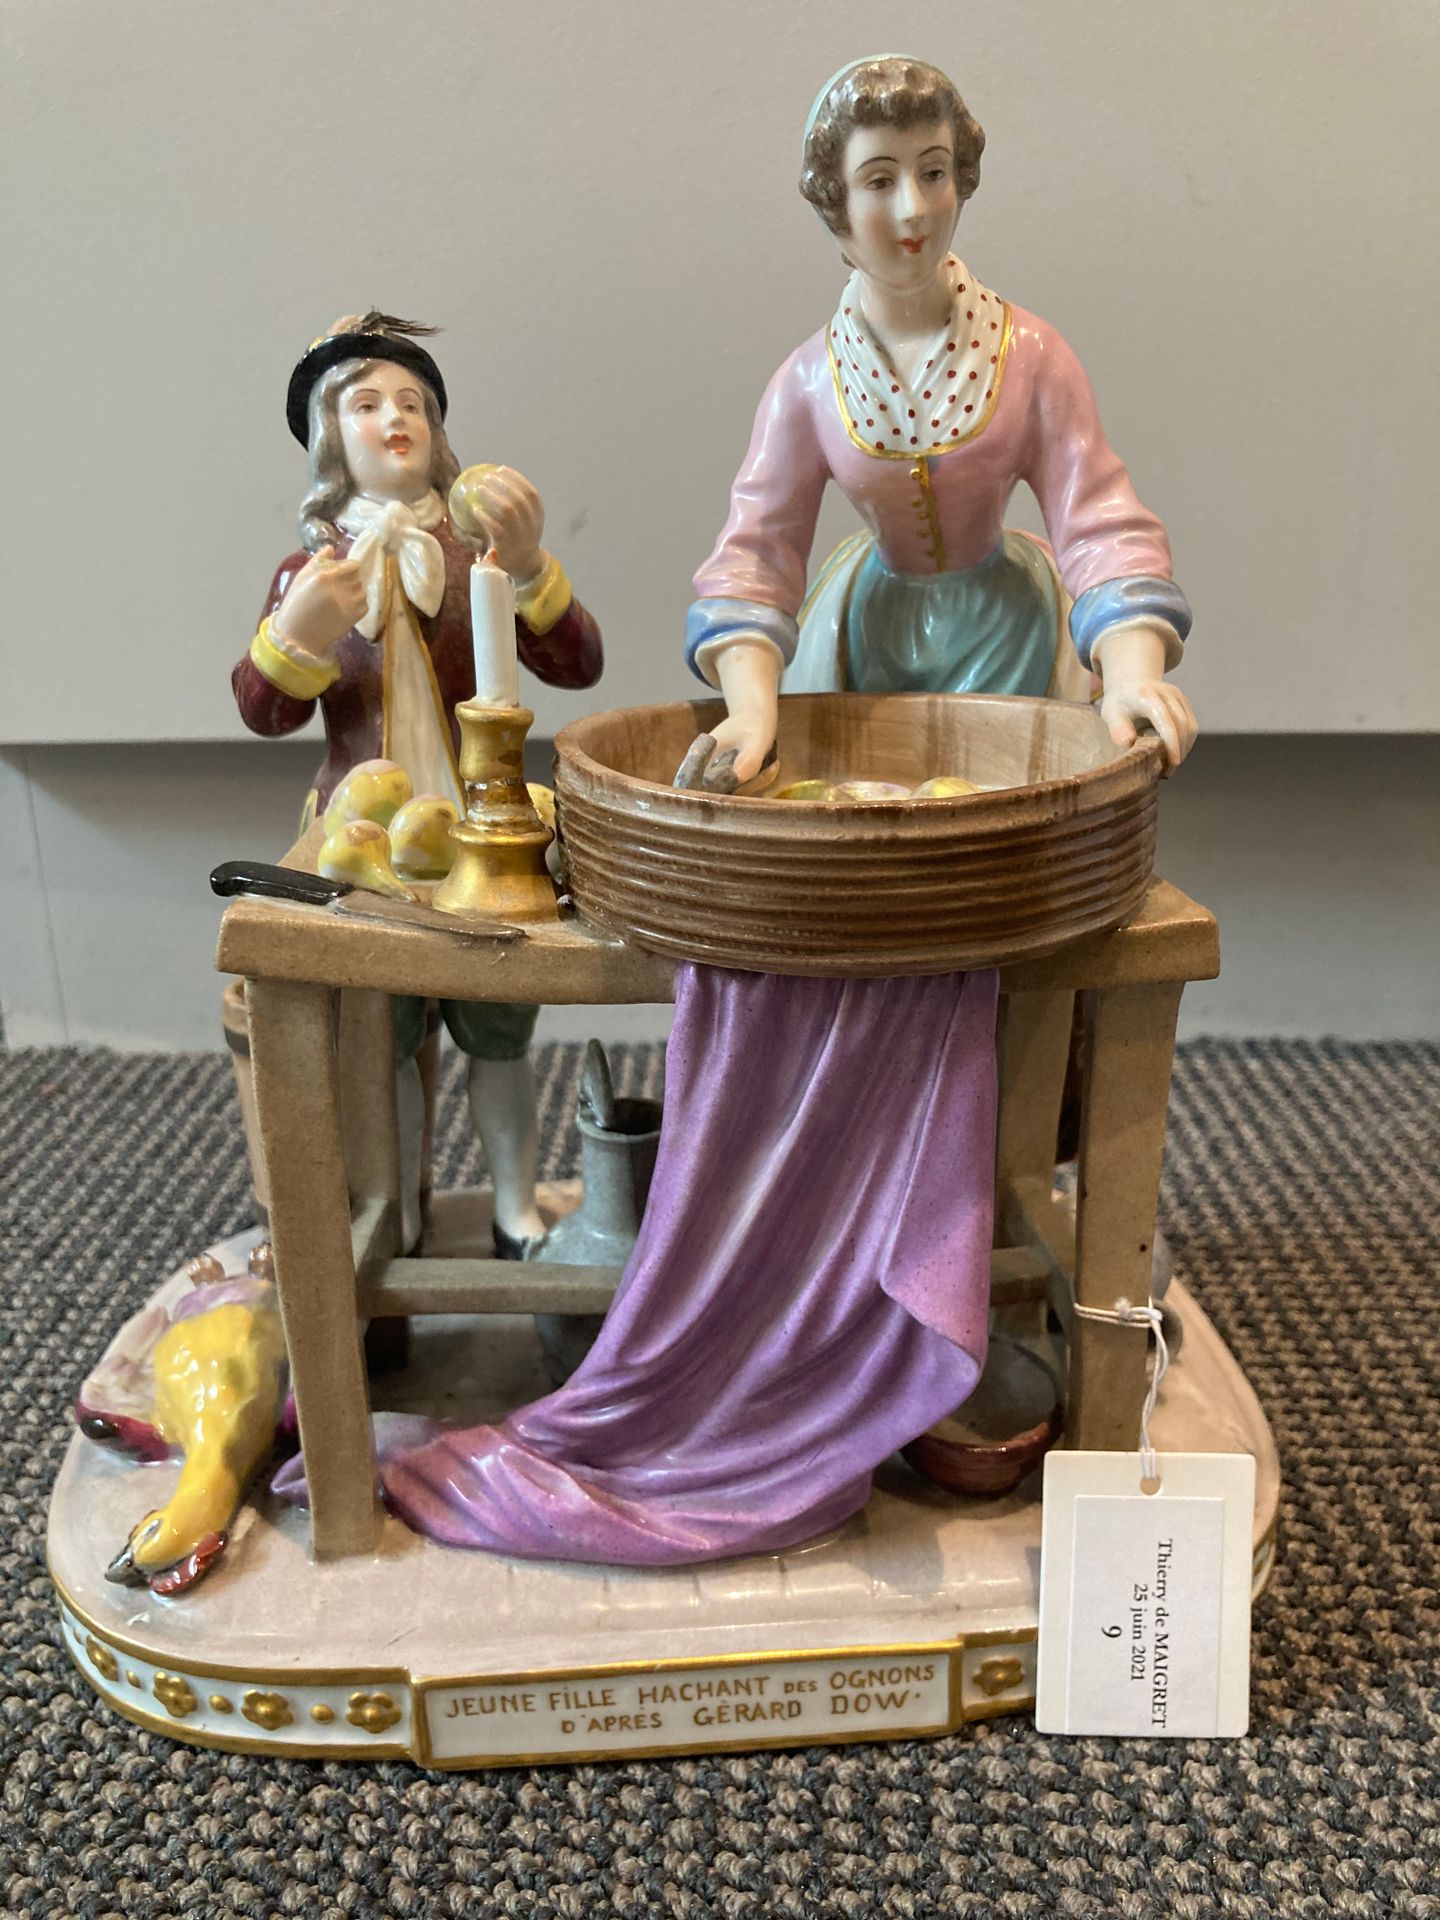 PARIS 多色处理的瓷器组，显示一个年轻的女人和她的店员在桌子上切洋葱，一只家禽在地上，有水壶和碗，上面写着 "Jeune fille hachant des&hellip;